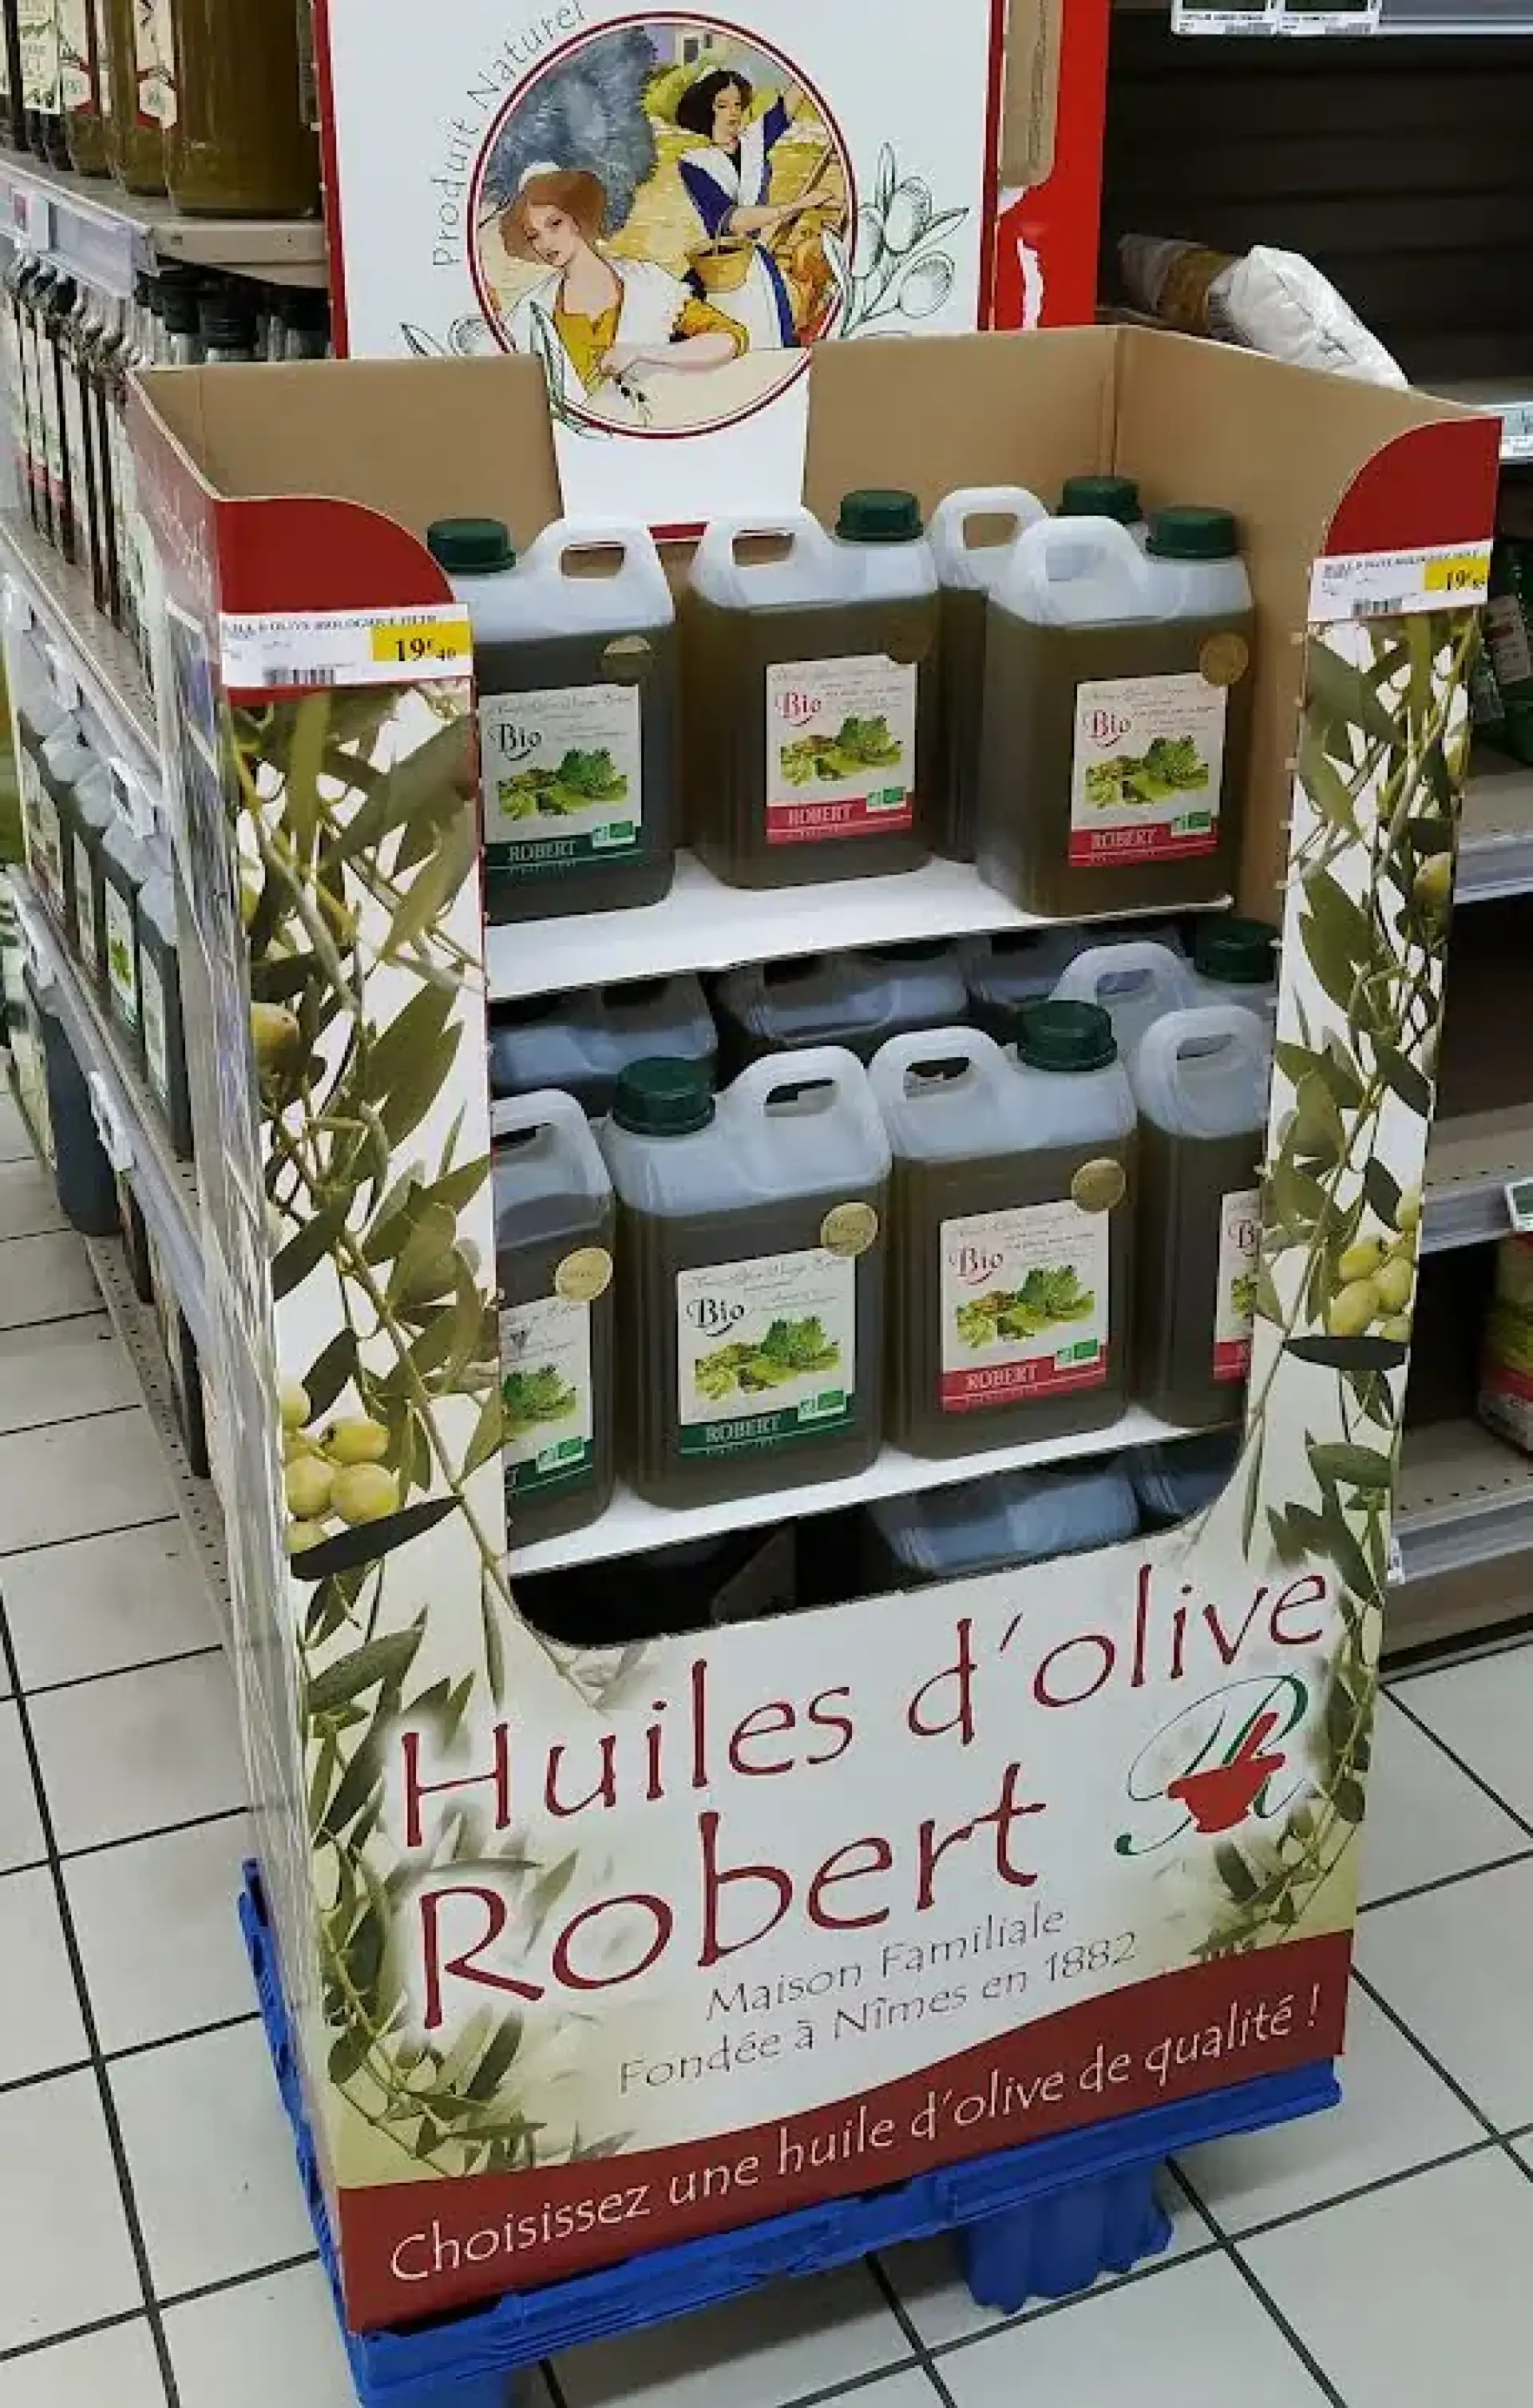 Huile d'olive Robert